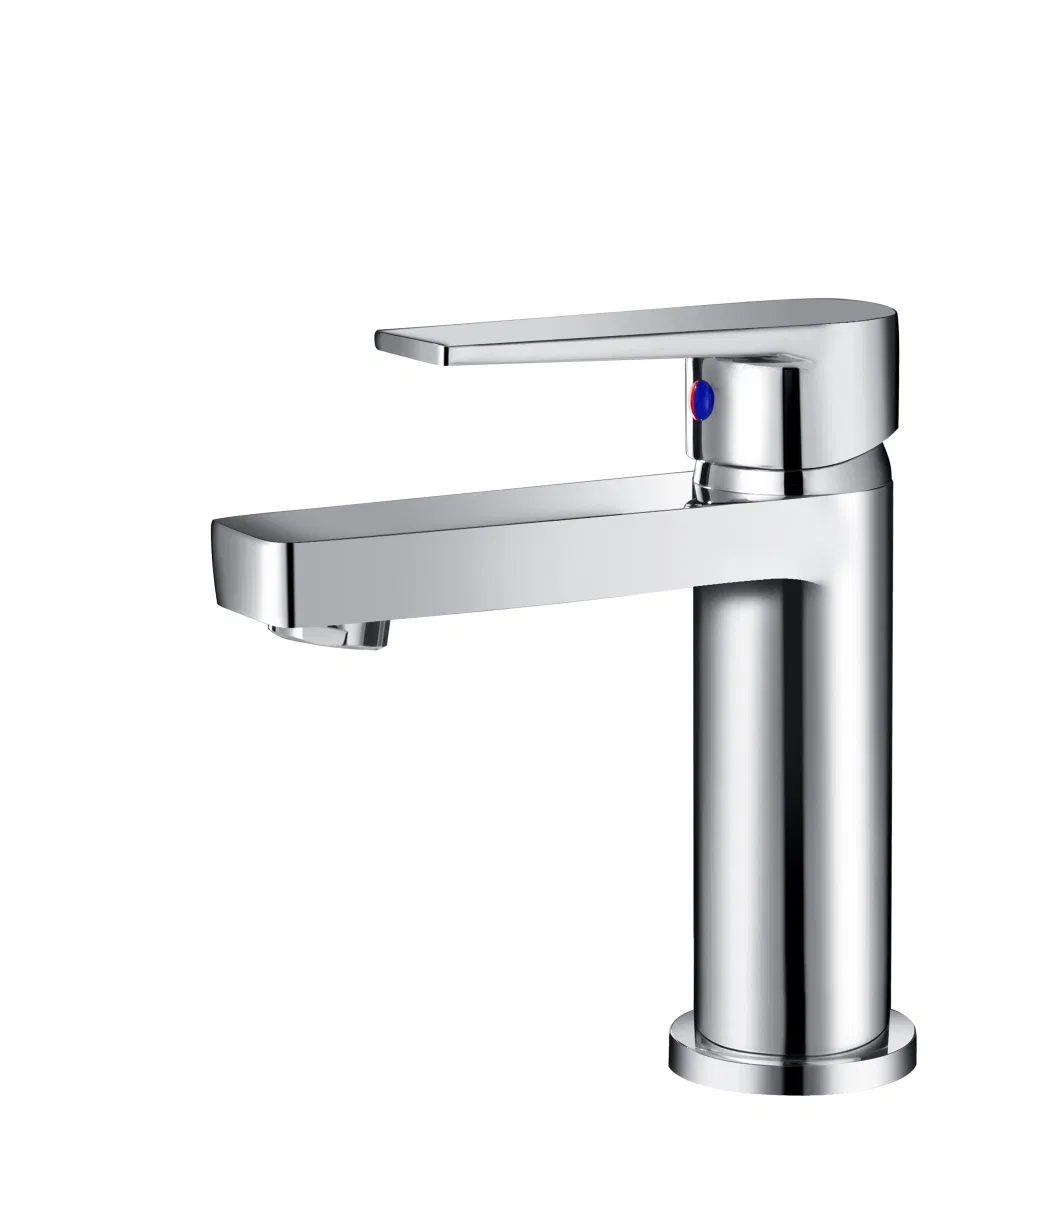 Wholesale Chrome Hot Cold Water Basin Faucet Mixer Bathroom Sink Faucet